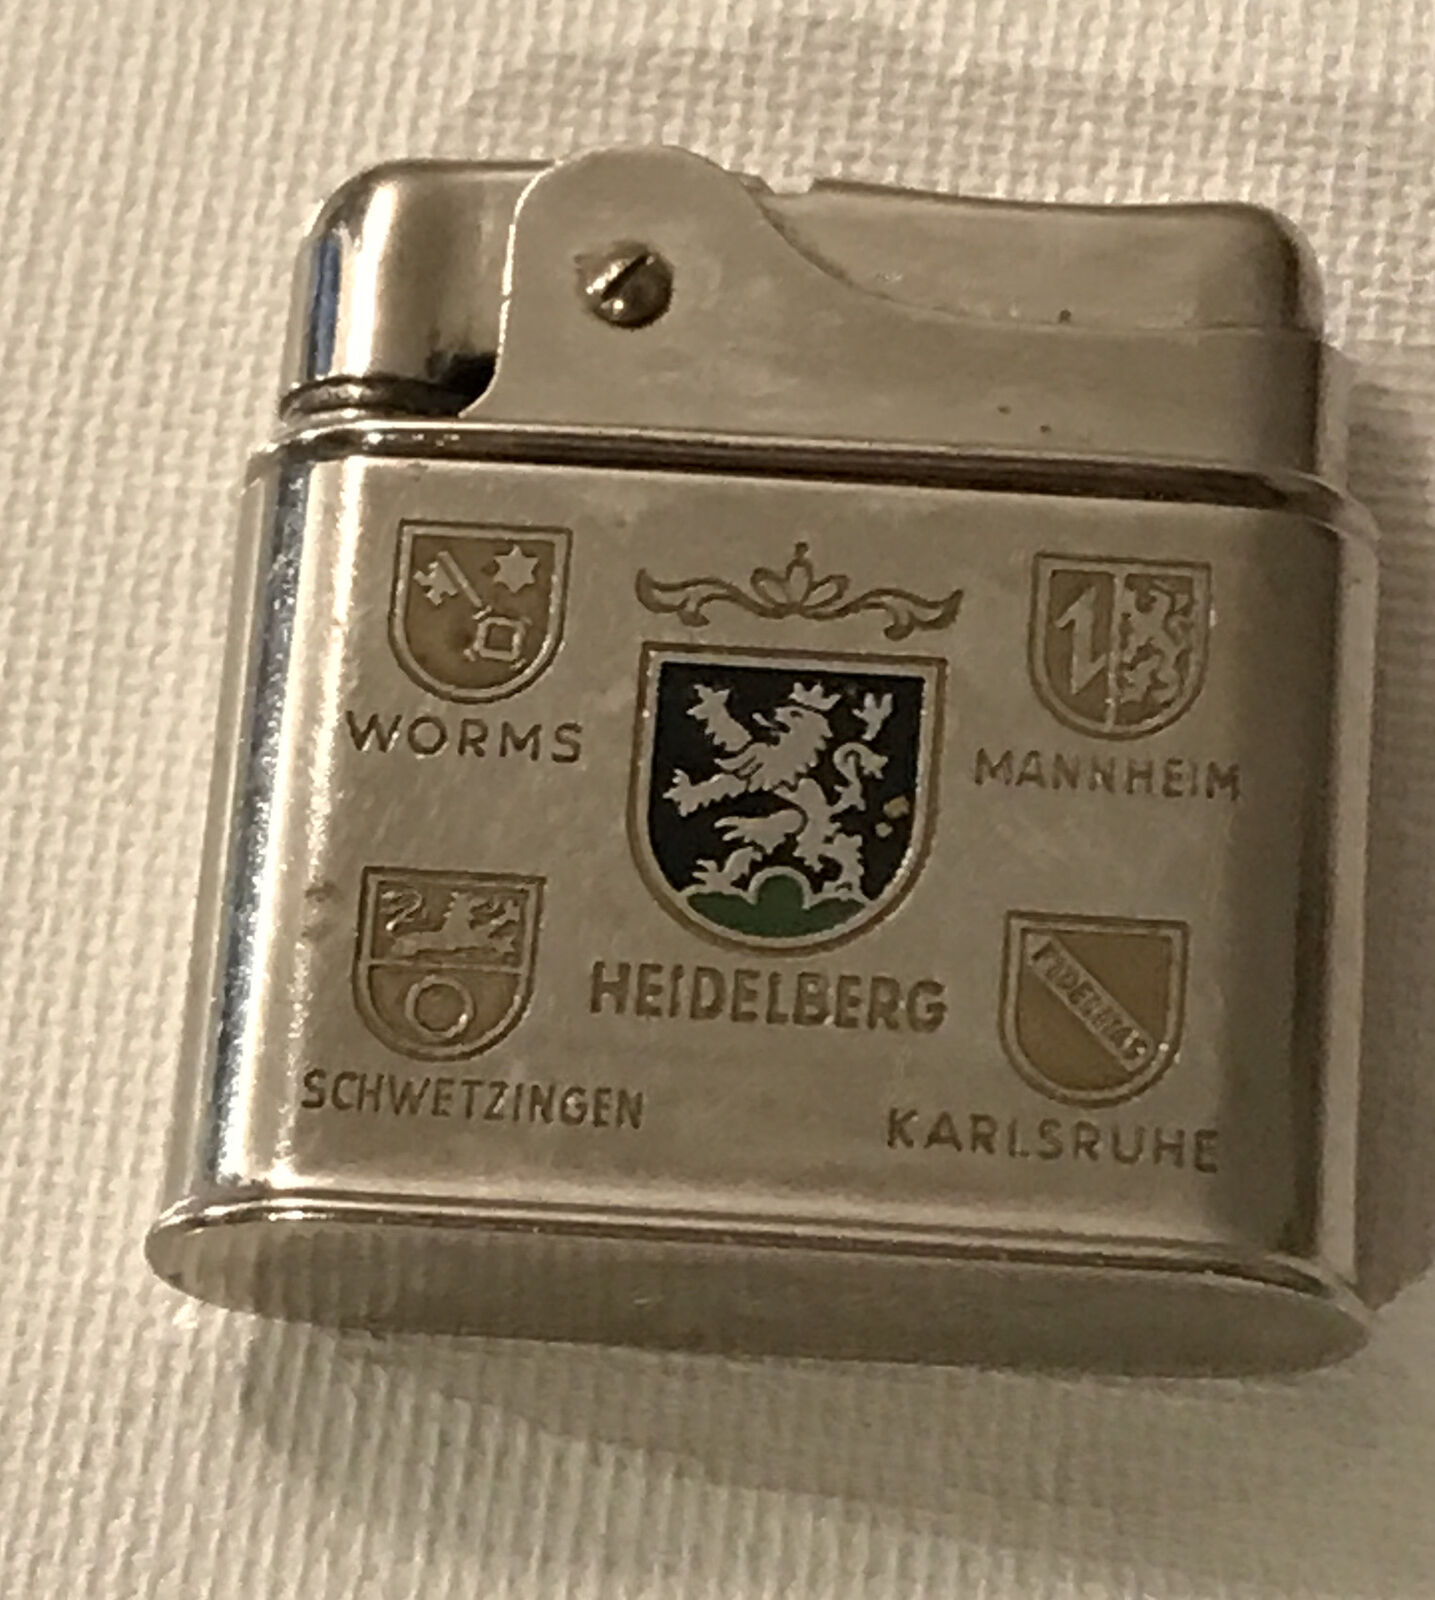 Vintage Eveready Heidelberg Mannheim Worms Cigarette Lighter Made in Germany